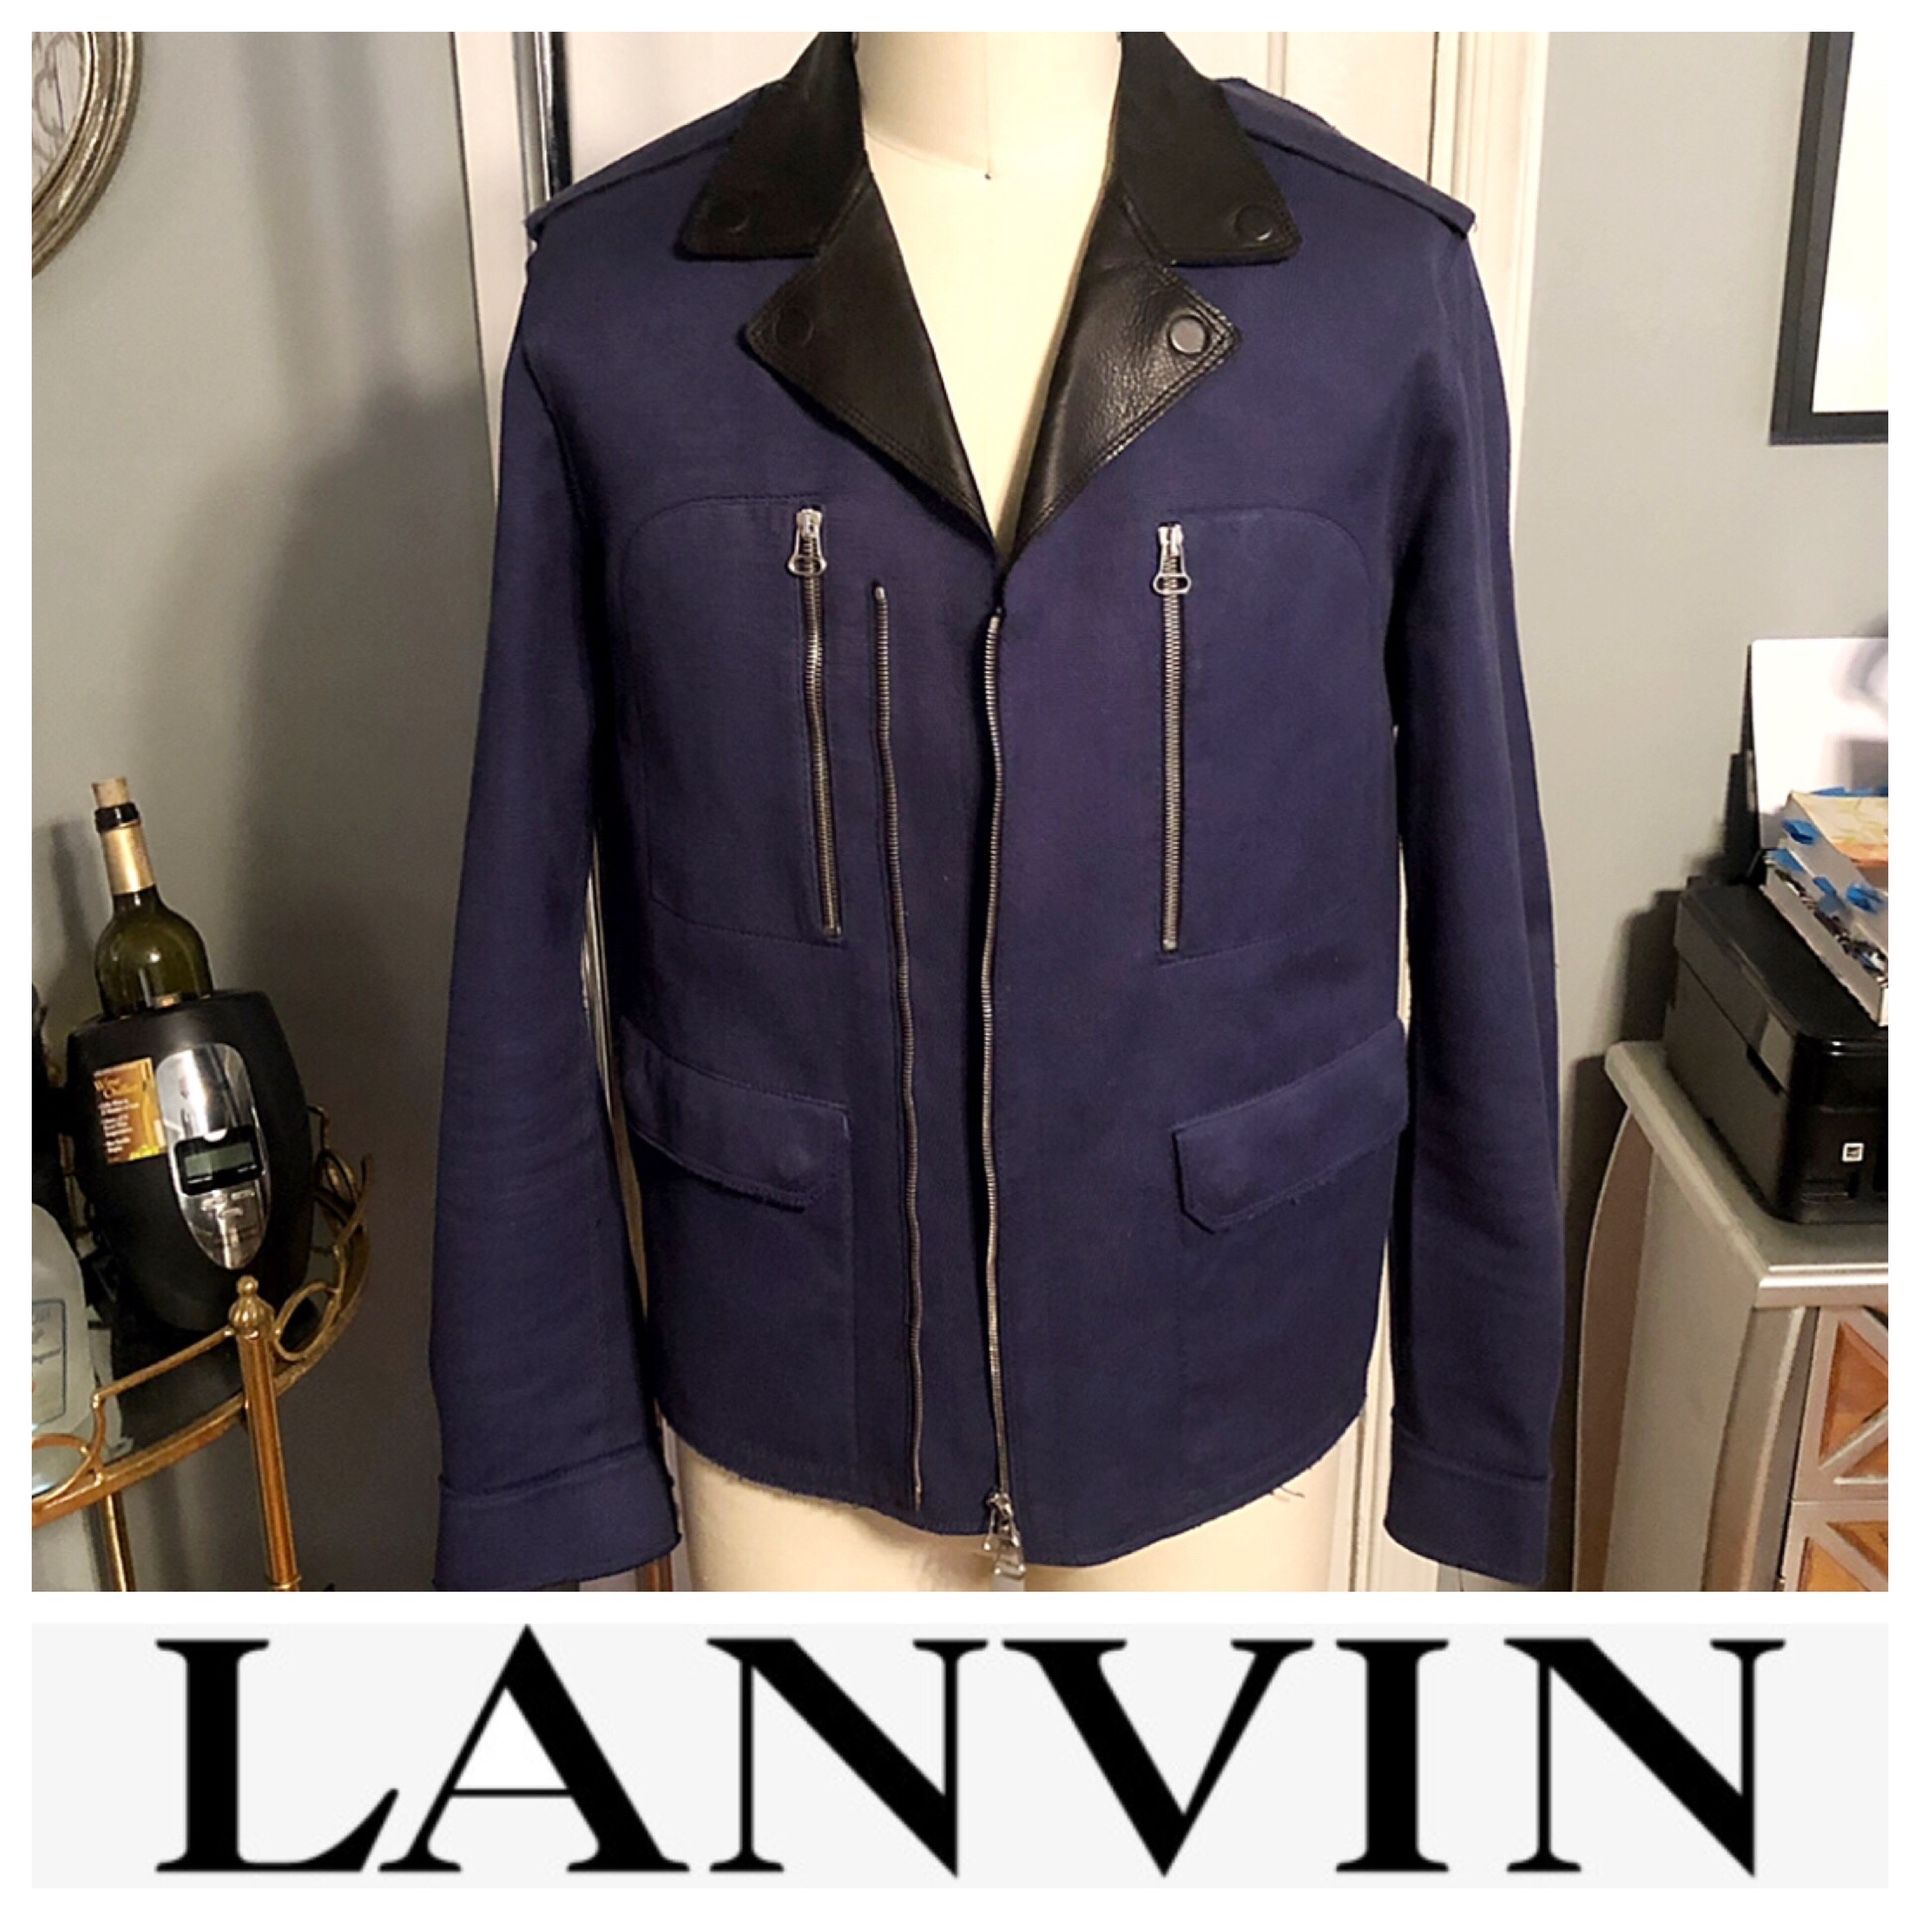 Men’s Lanvin biker jacket paid $3,800 size 52 (XL) leather. Excellent condition. Only worn twice!